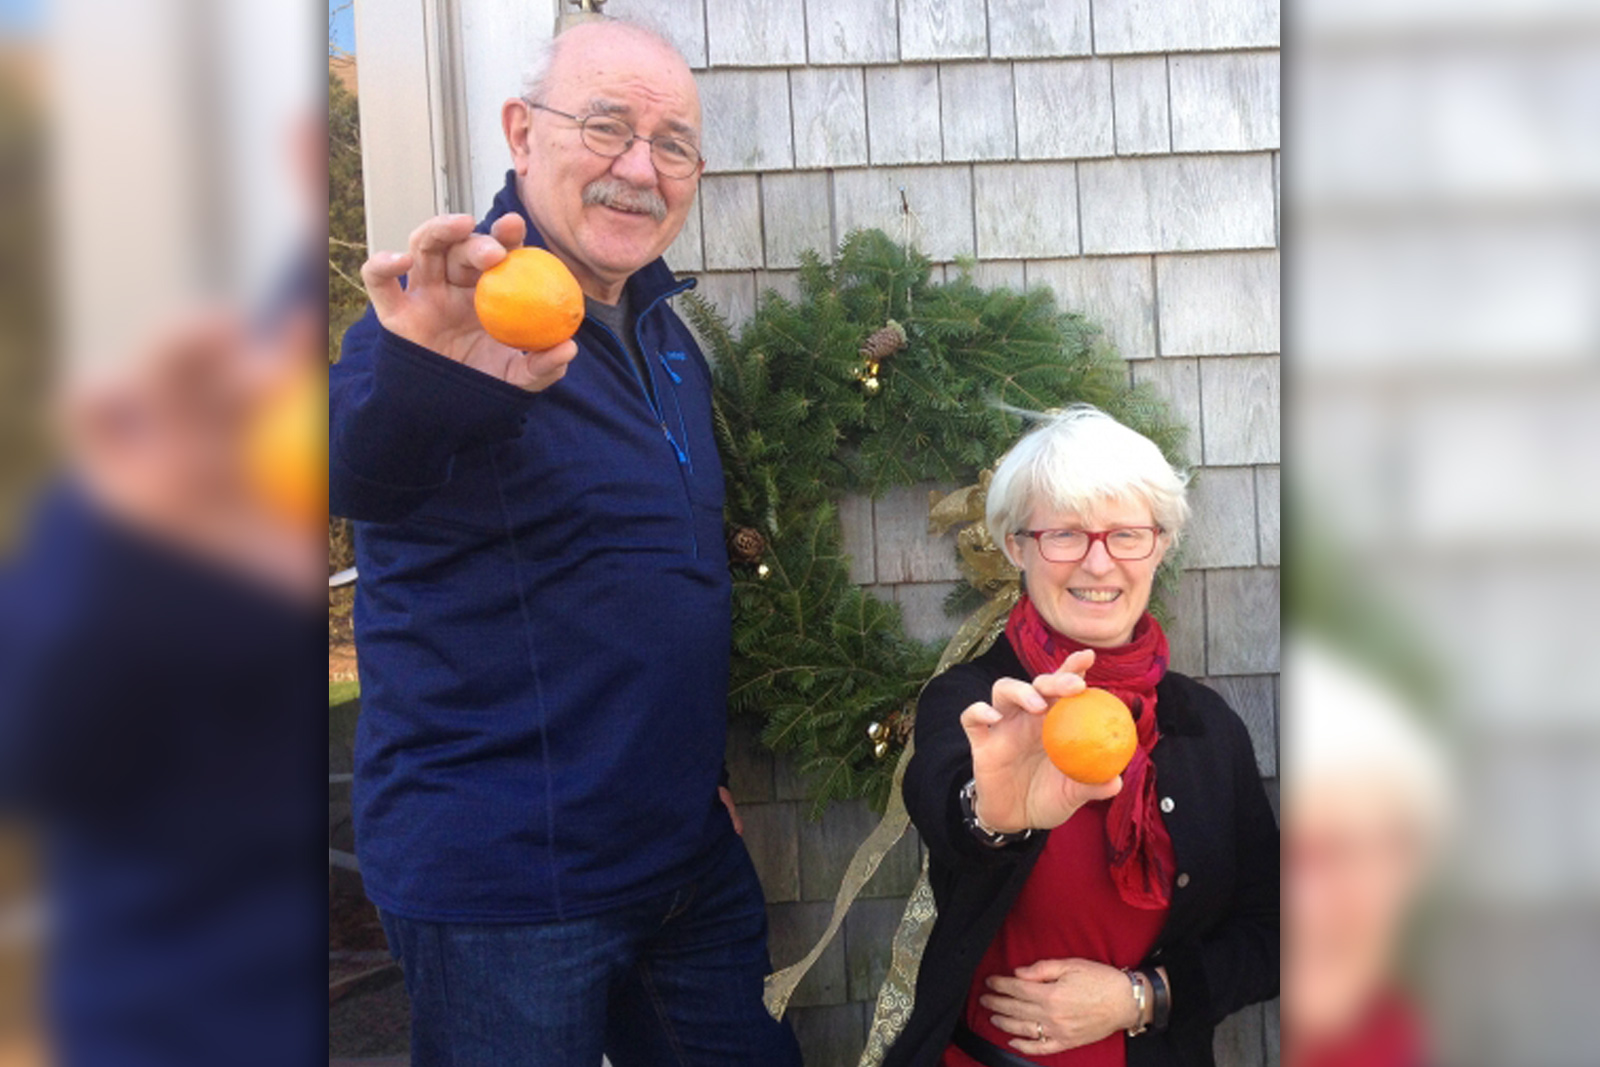 Michael and Julie Rafferty holding oranges